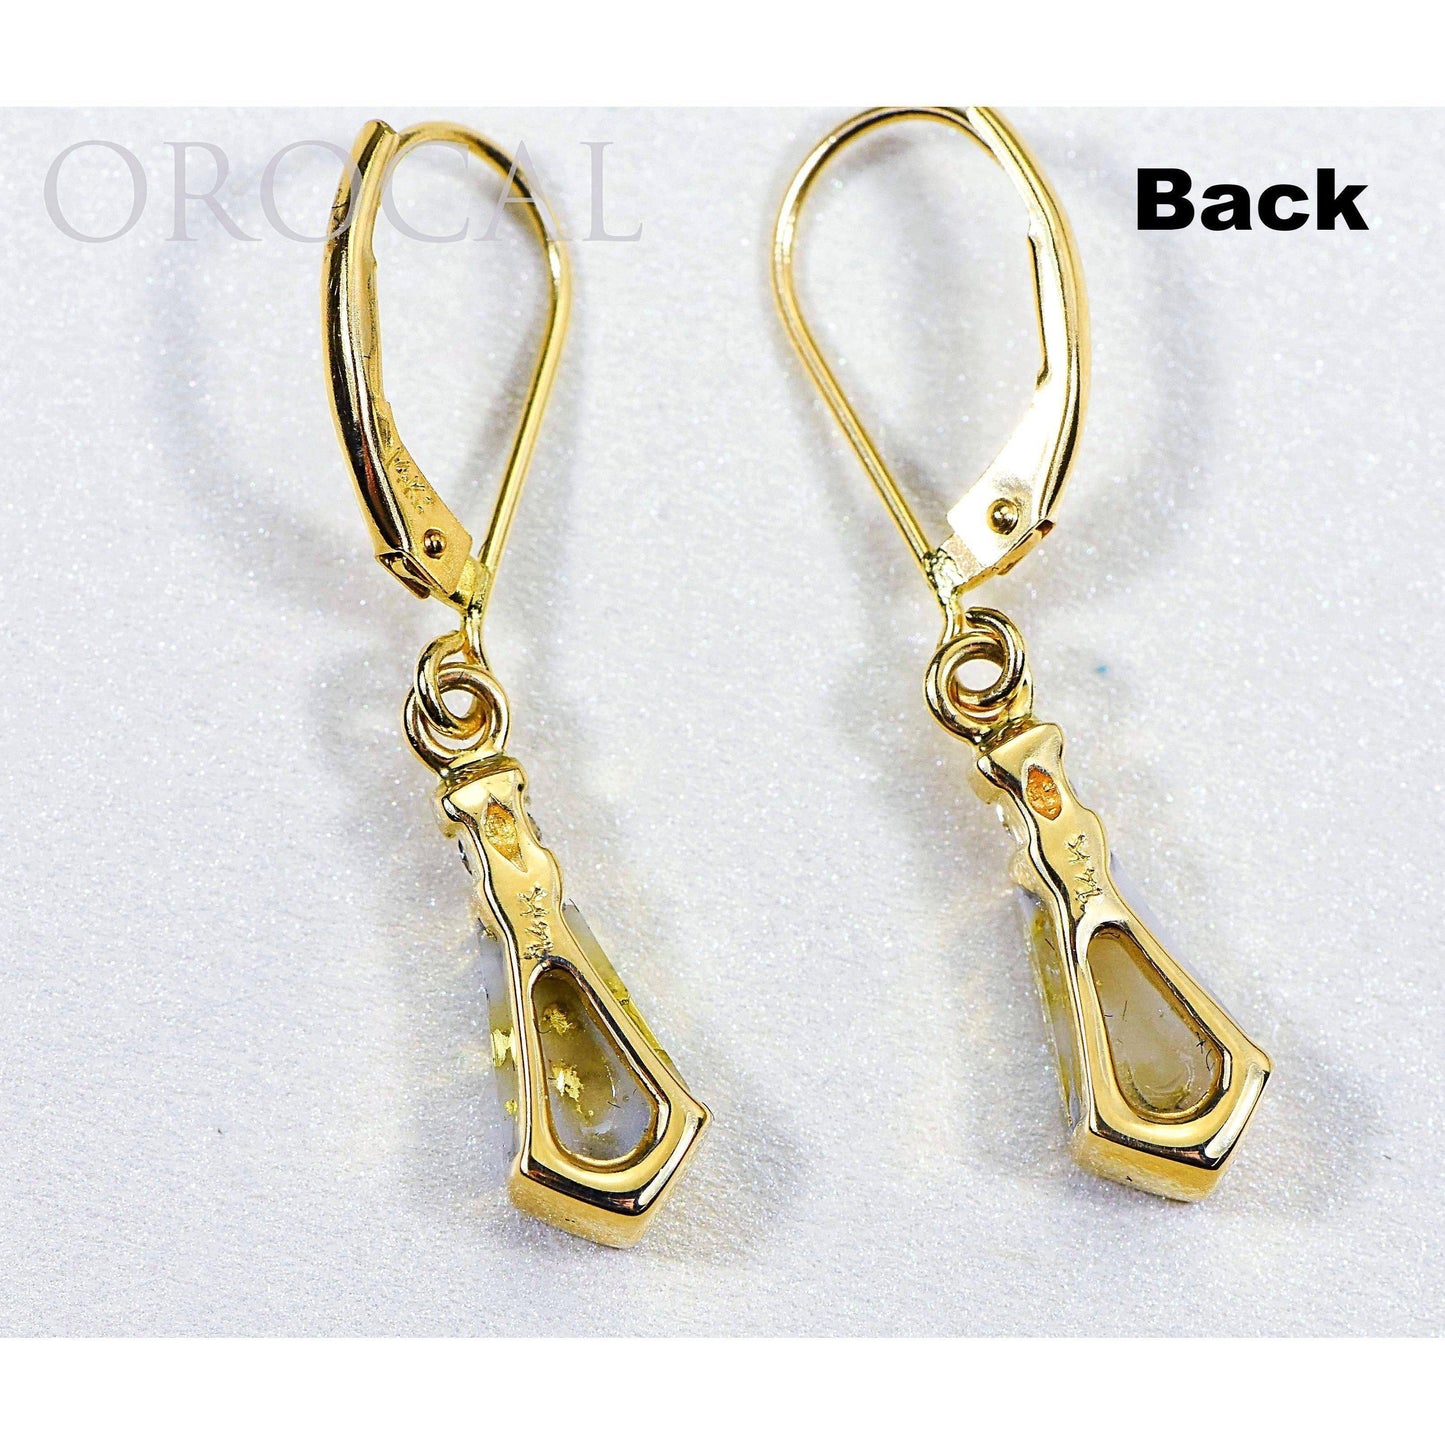 Orocal Gold Quartz Earrings with Diamonds EN641D8Q/LB-Destination Gold Detectors